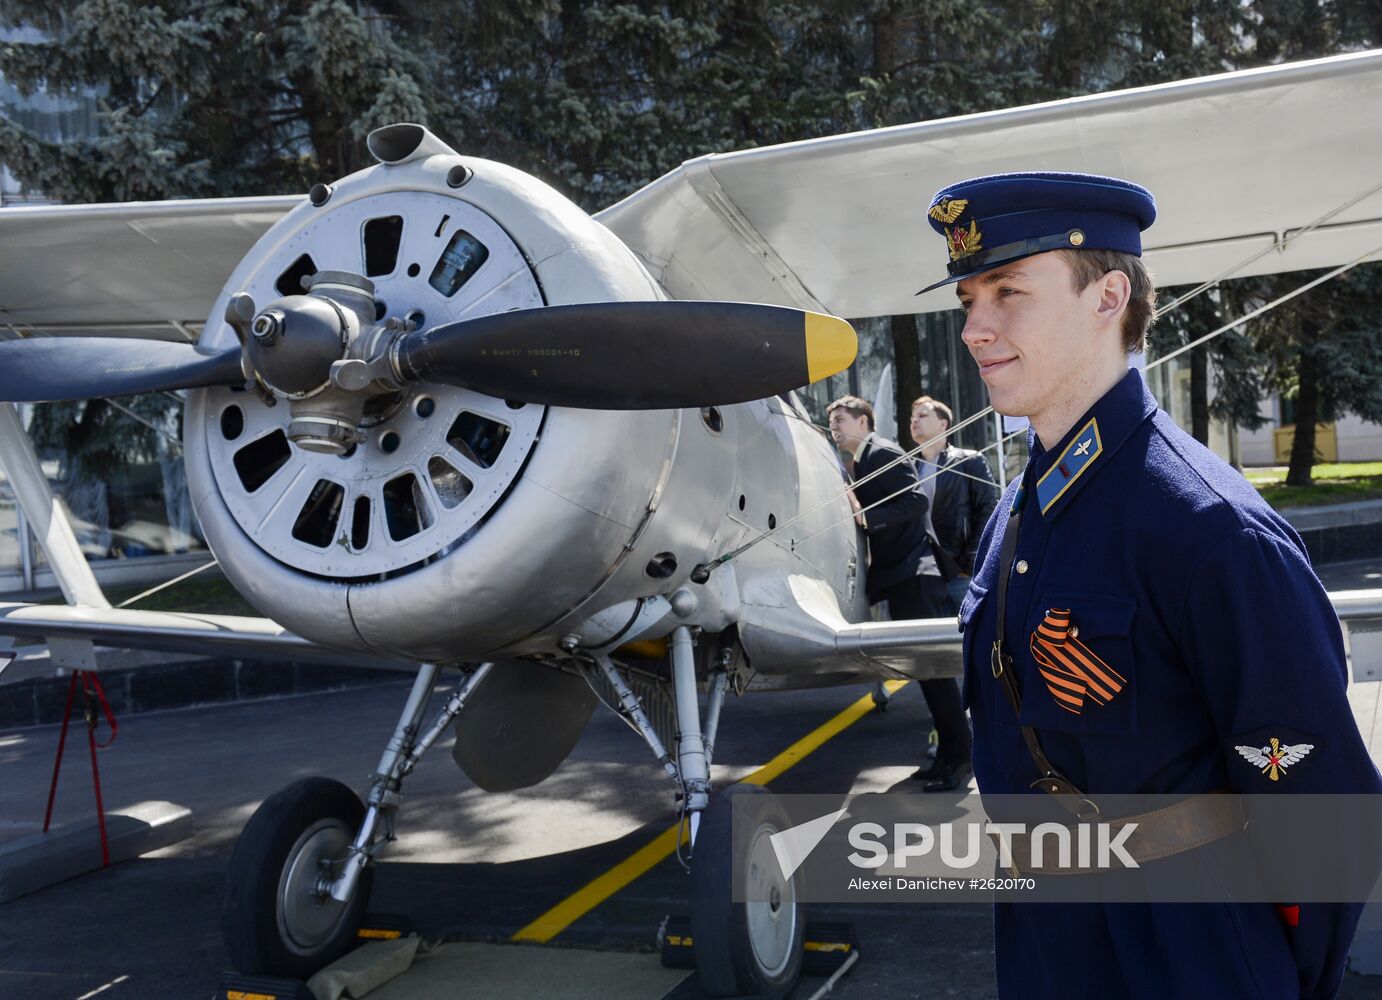 Exhibition of Great Patriotic War combat aircraft at Vnukovo airport